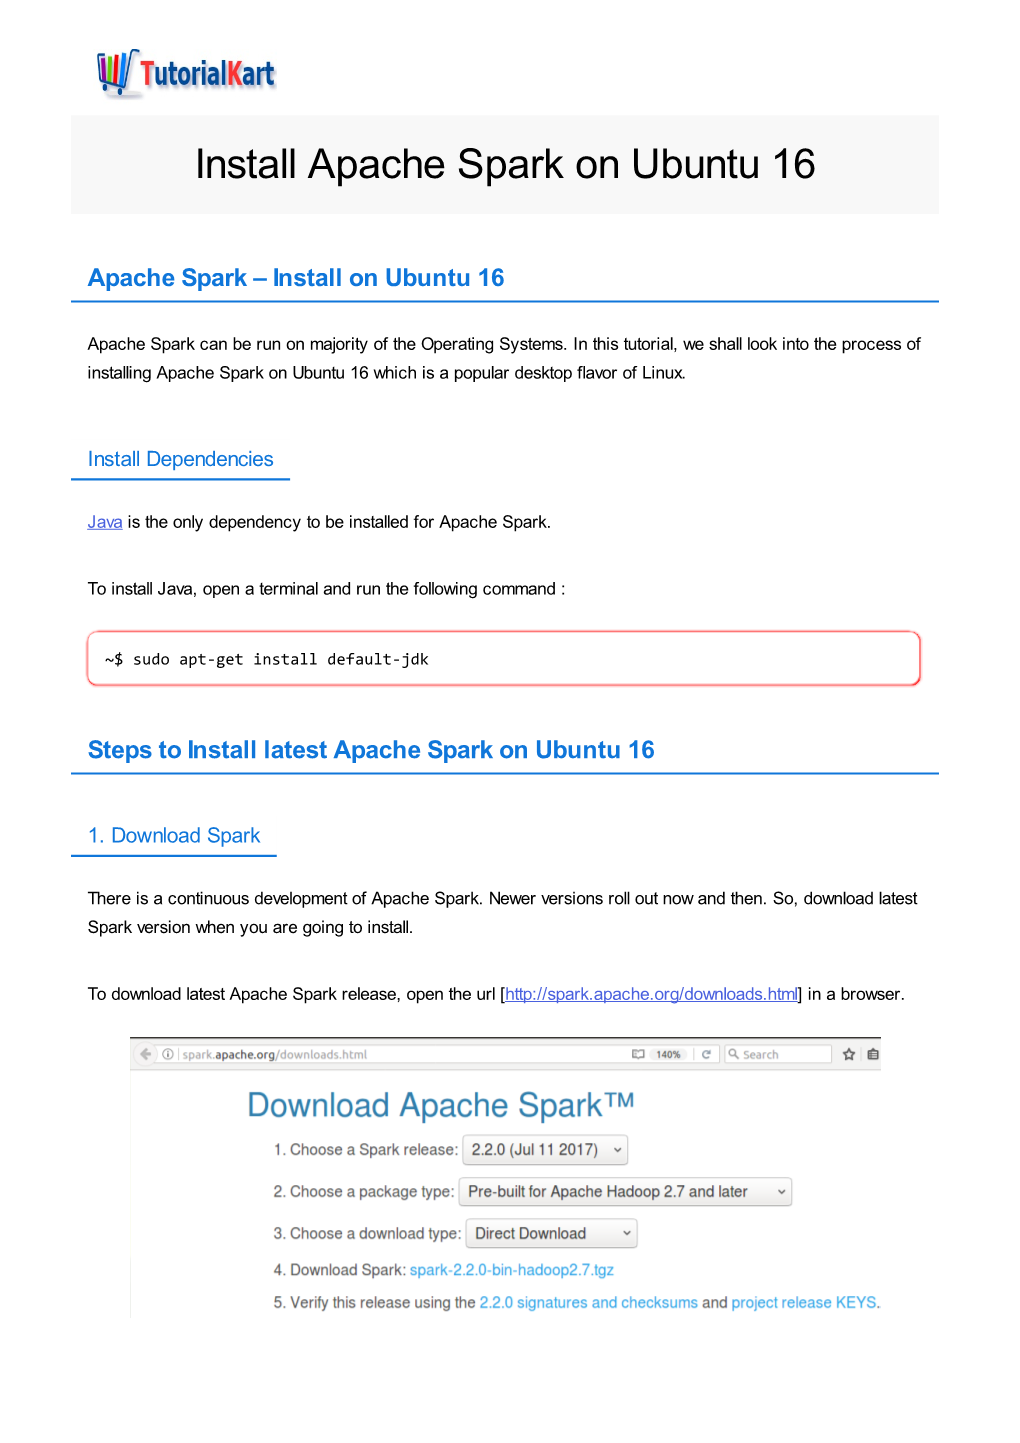 How to Install Latest Apache Spark on Ubuntu 16